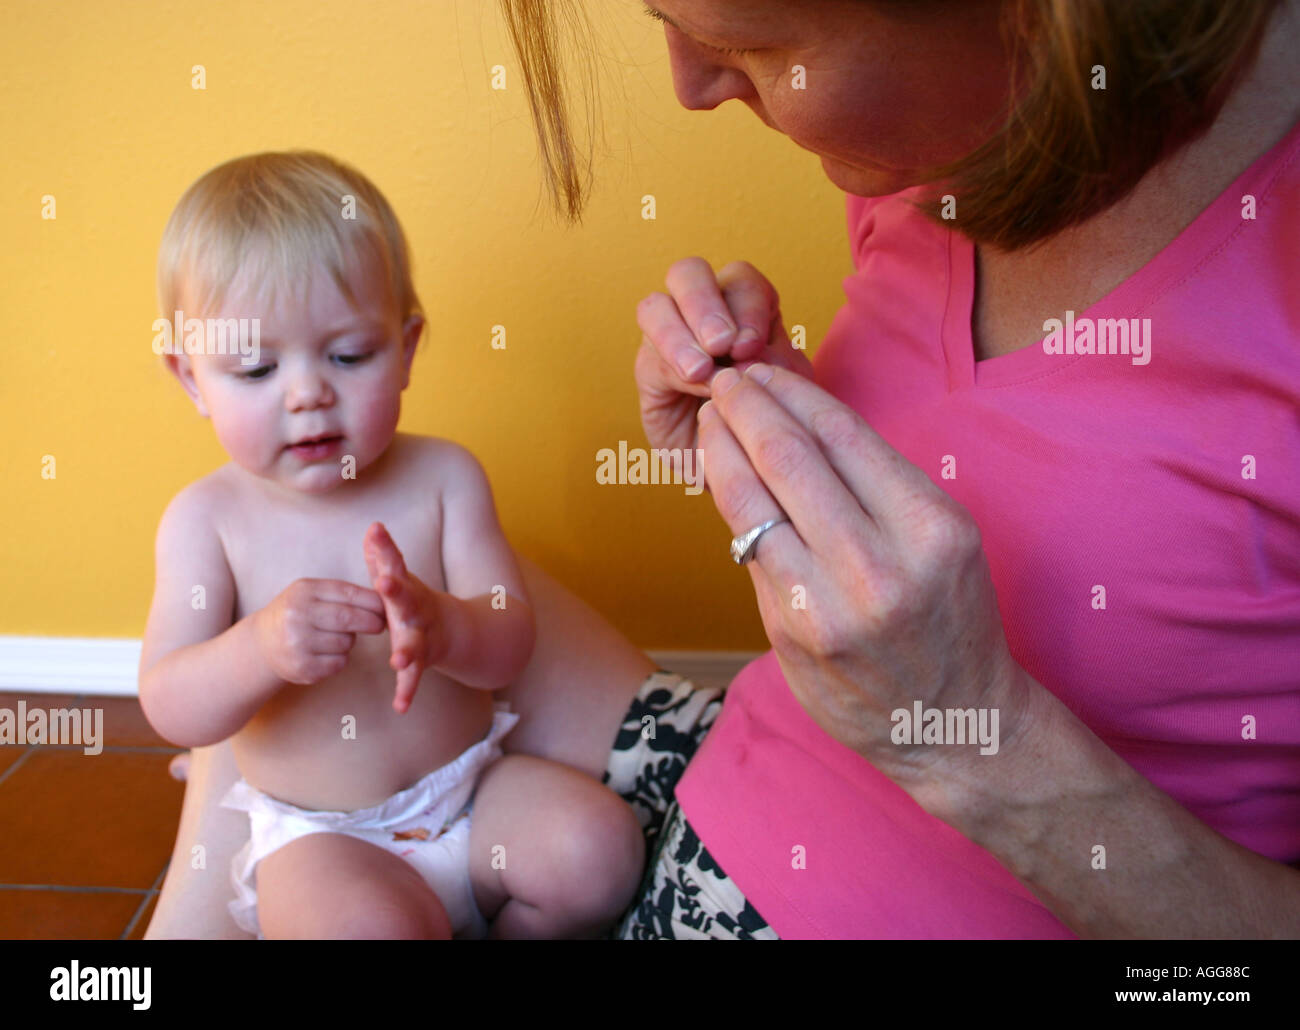 mother communicating with child using sign language Stock Photo